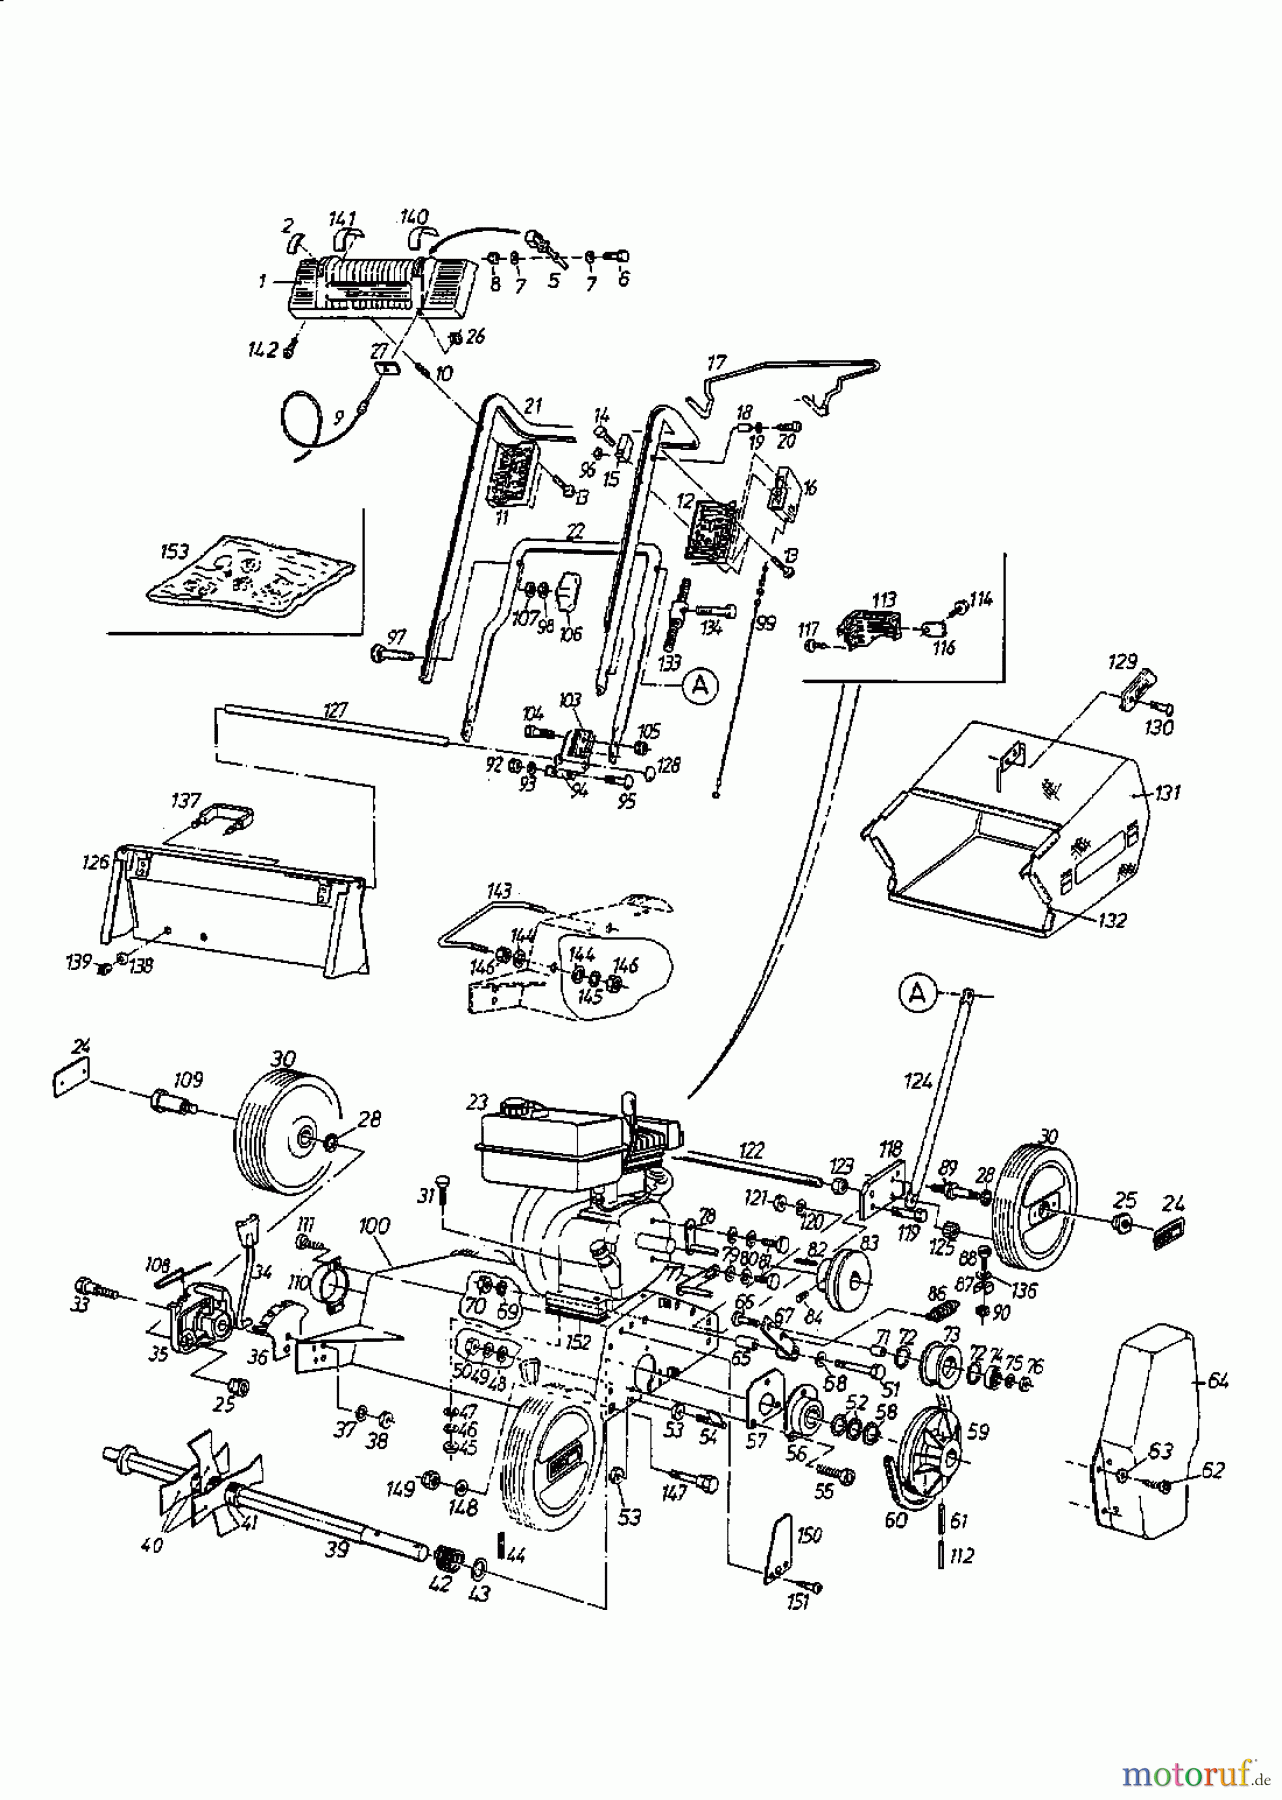  Gutbrod Petrol verticutter MV 404 16APL01U690  (2000) Basic machine